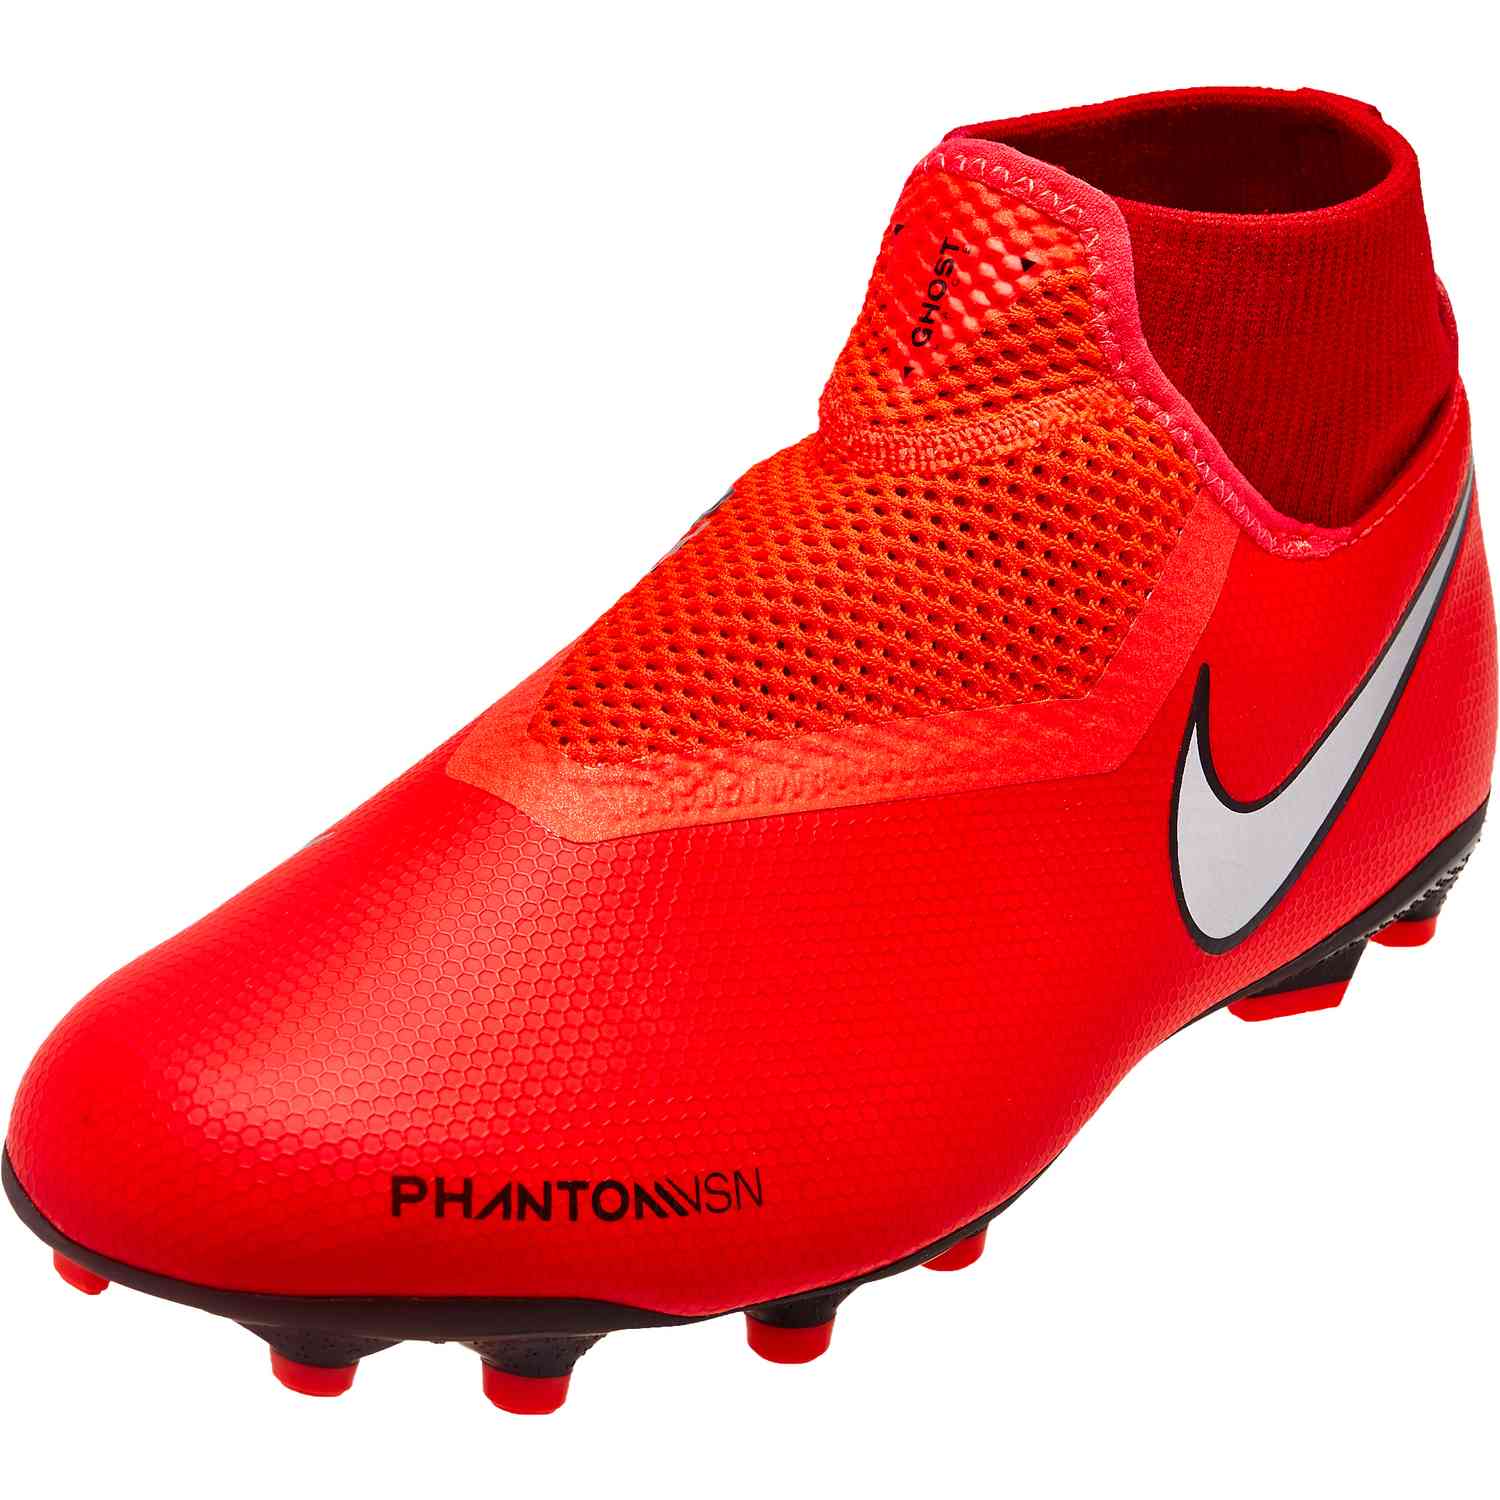 Nike Phantom Vision Academy Raised on Concrete Review Soccer